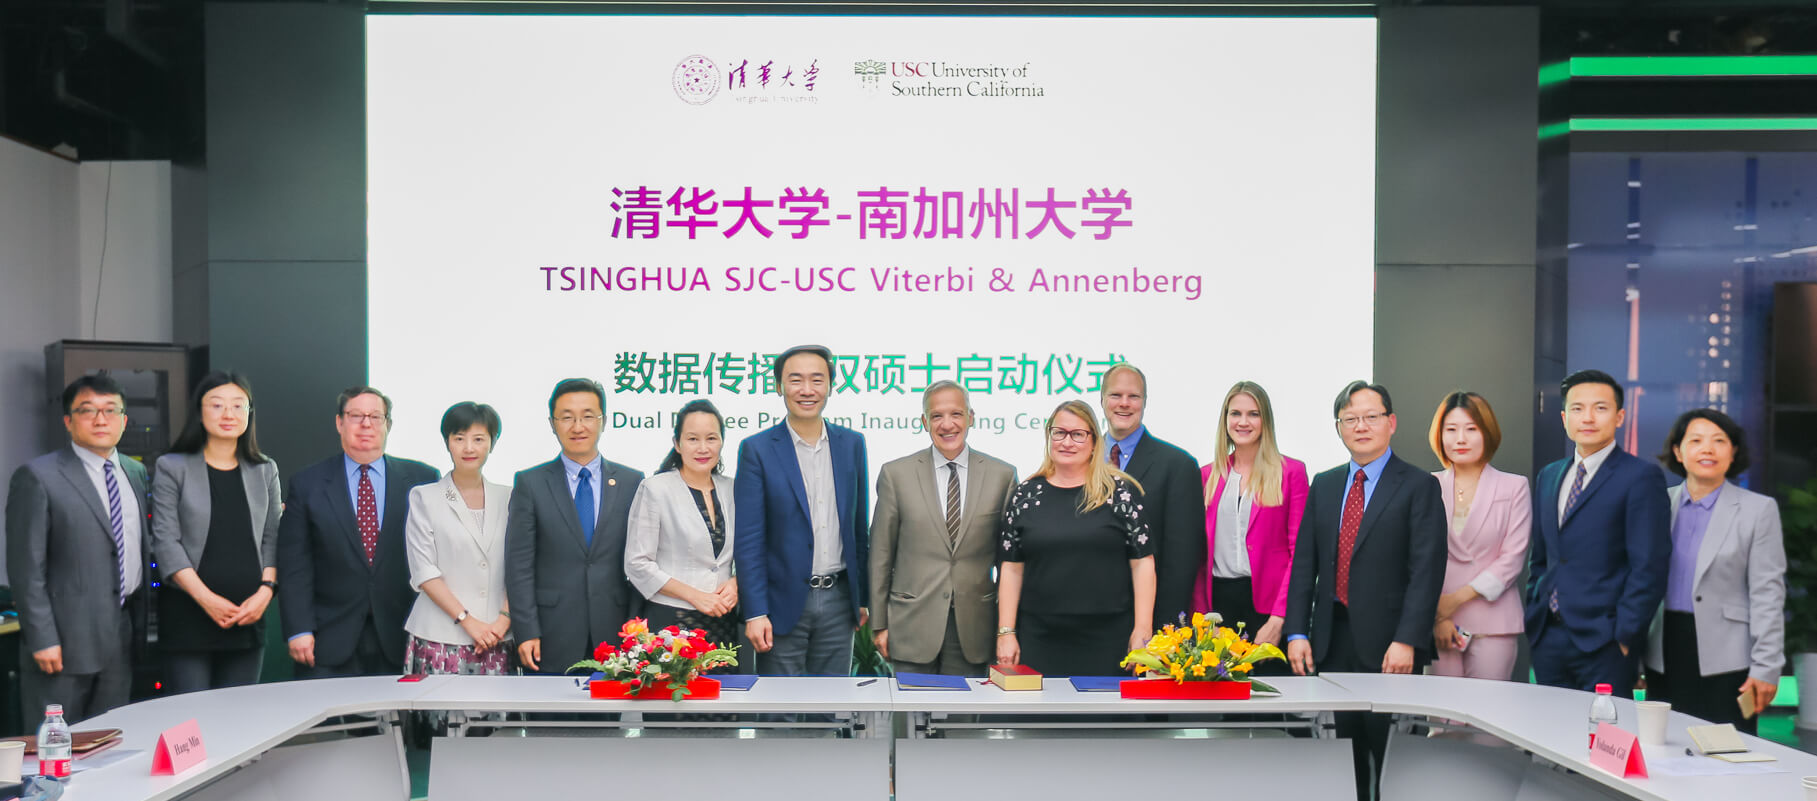 USC Viterbi Deans Yannis Yortsos and Erik Johnson sign an agreement with Tsinghua University to begin a joint dual degree program. Photo credit: Tsinghua University.